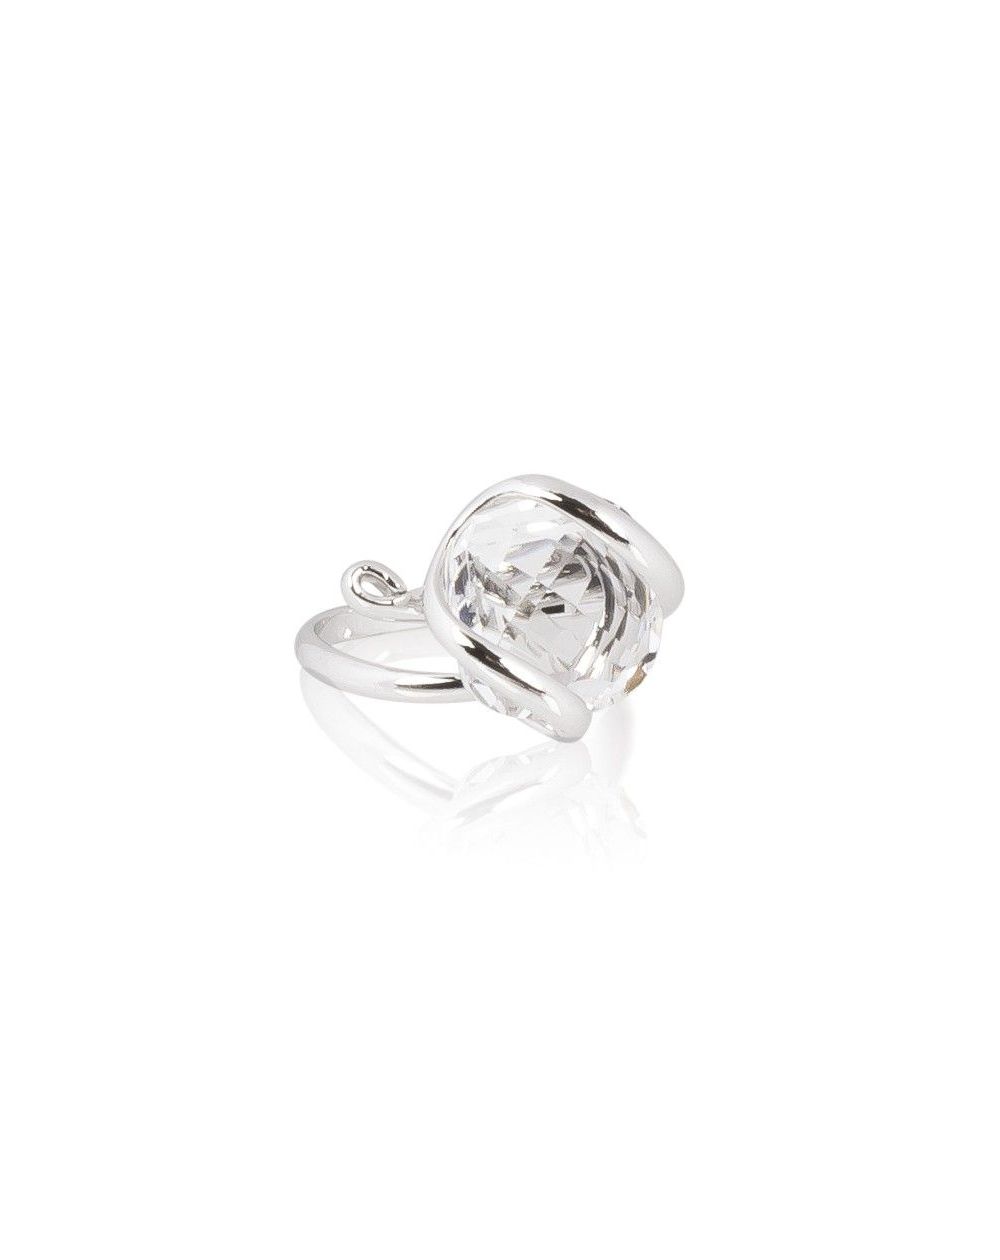 Andrea Marazzini bijoux - Bague cristal Swarovski Mini Crystal